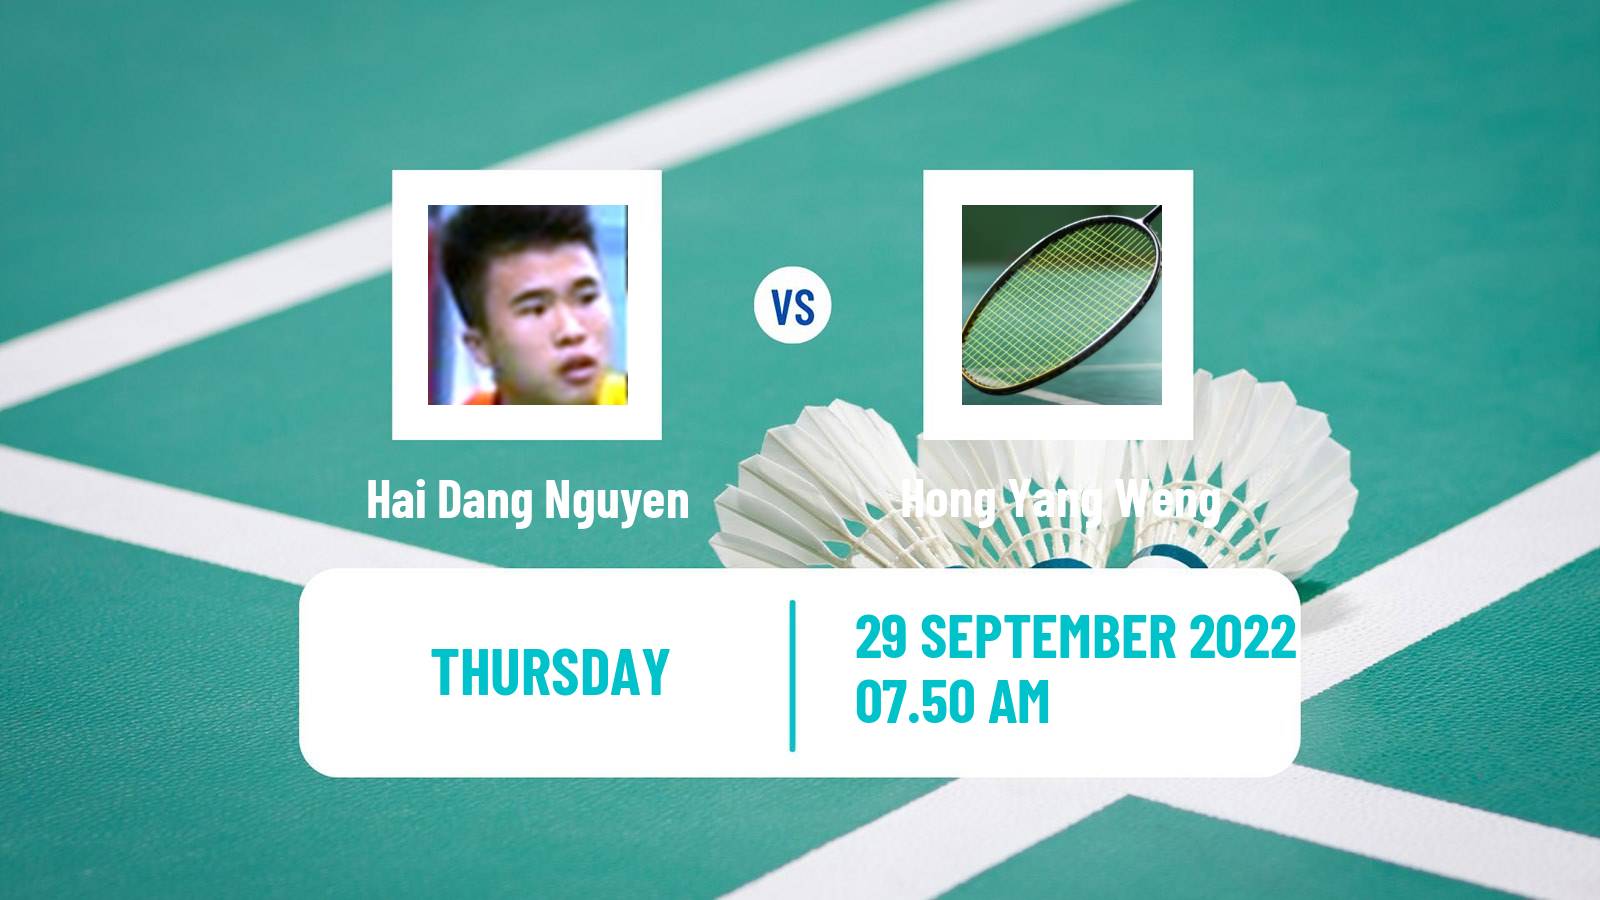 Badminton Badminton Hai Dang Nguyen - Hong Yang Weng